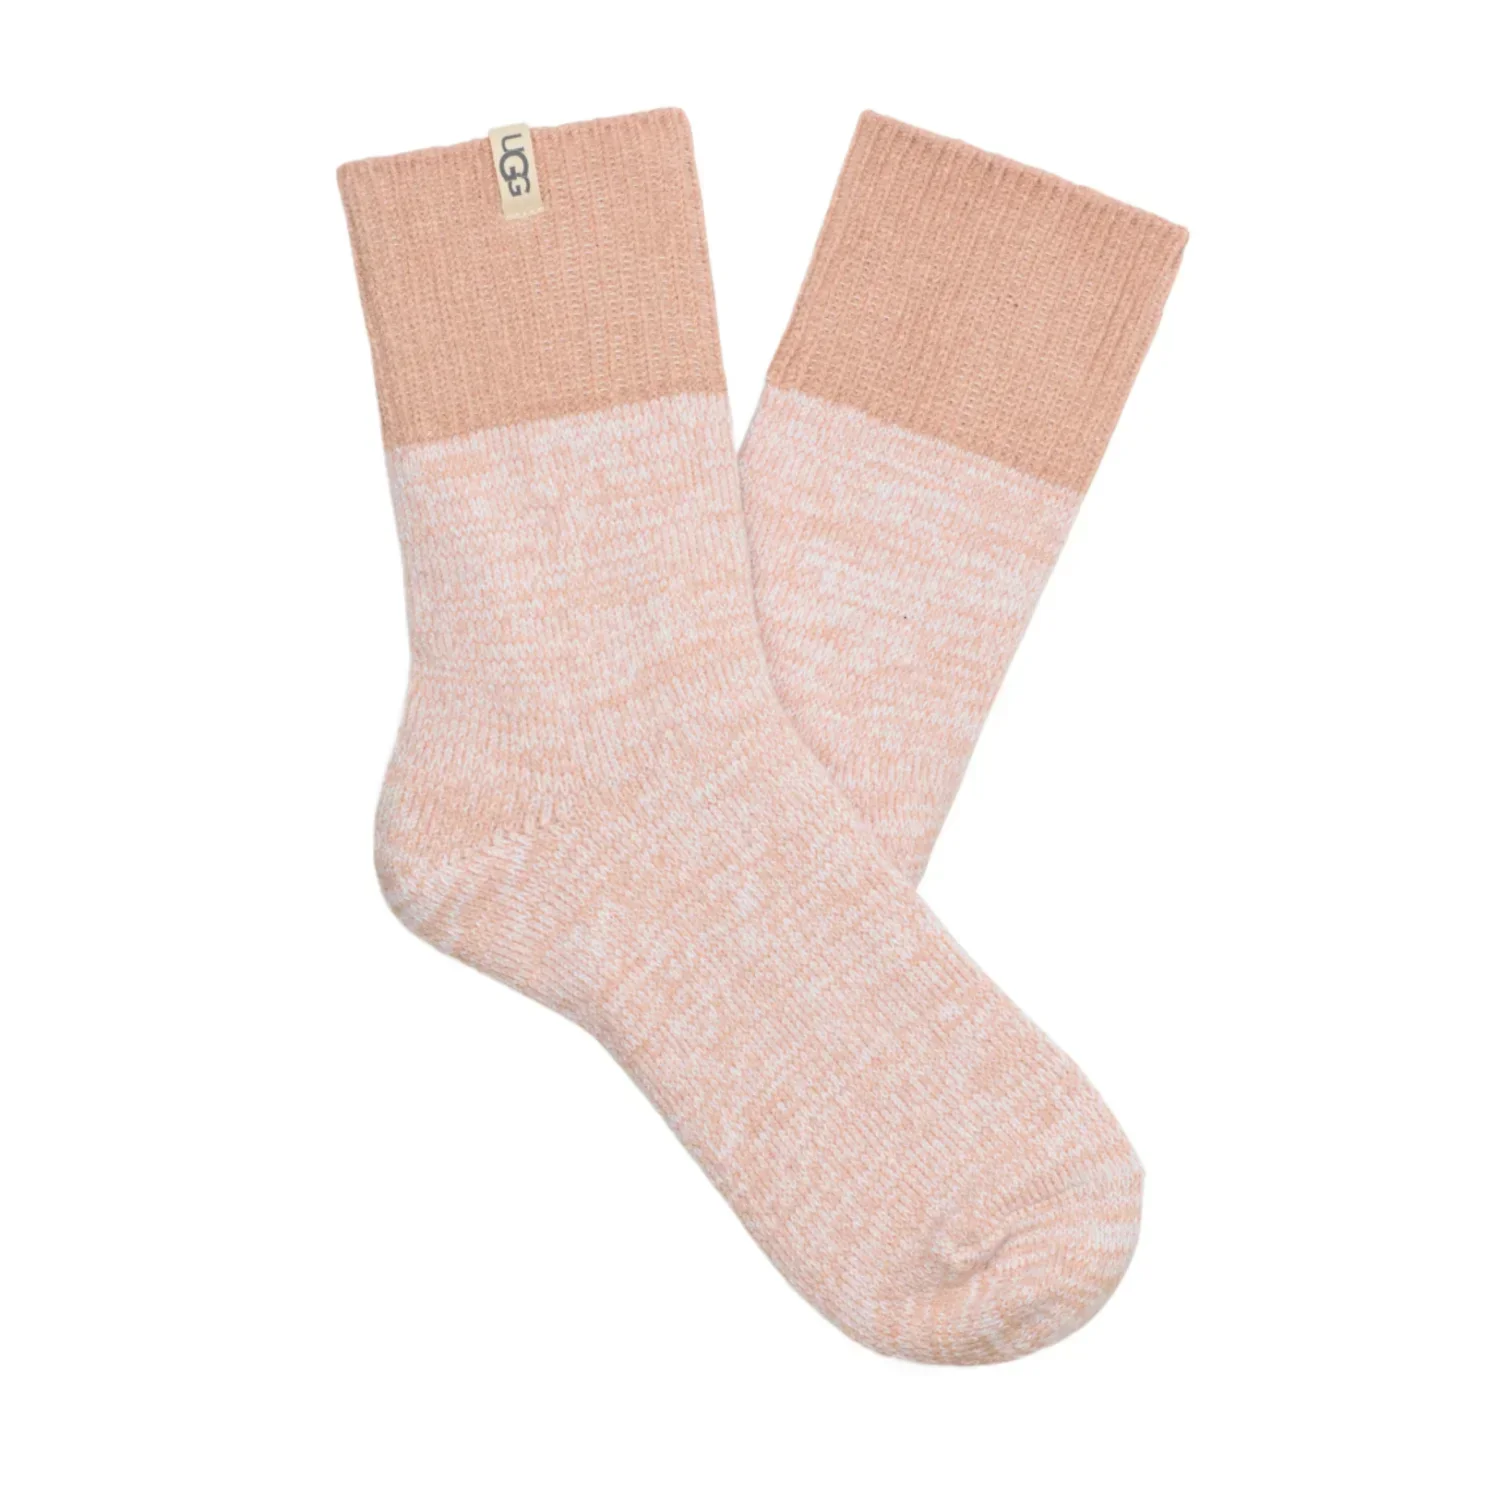 UGG SOCKS - WOMENS SOCKS - WOMENS SOCKS GIFT Women's Rib Knit Slouchy Quarter Sock ROSE TEA OS